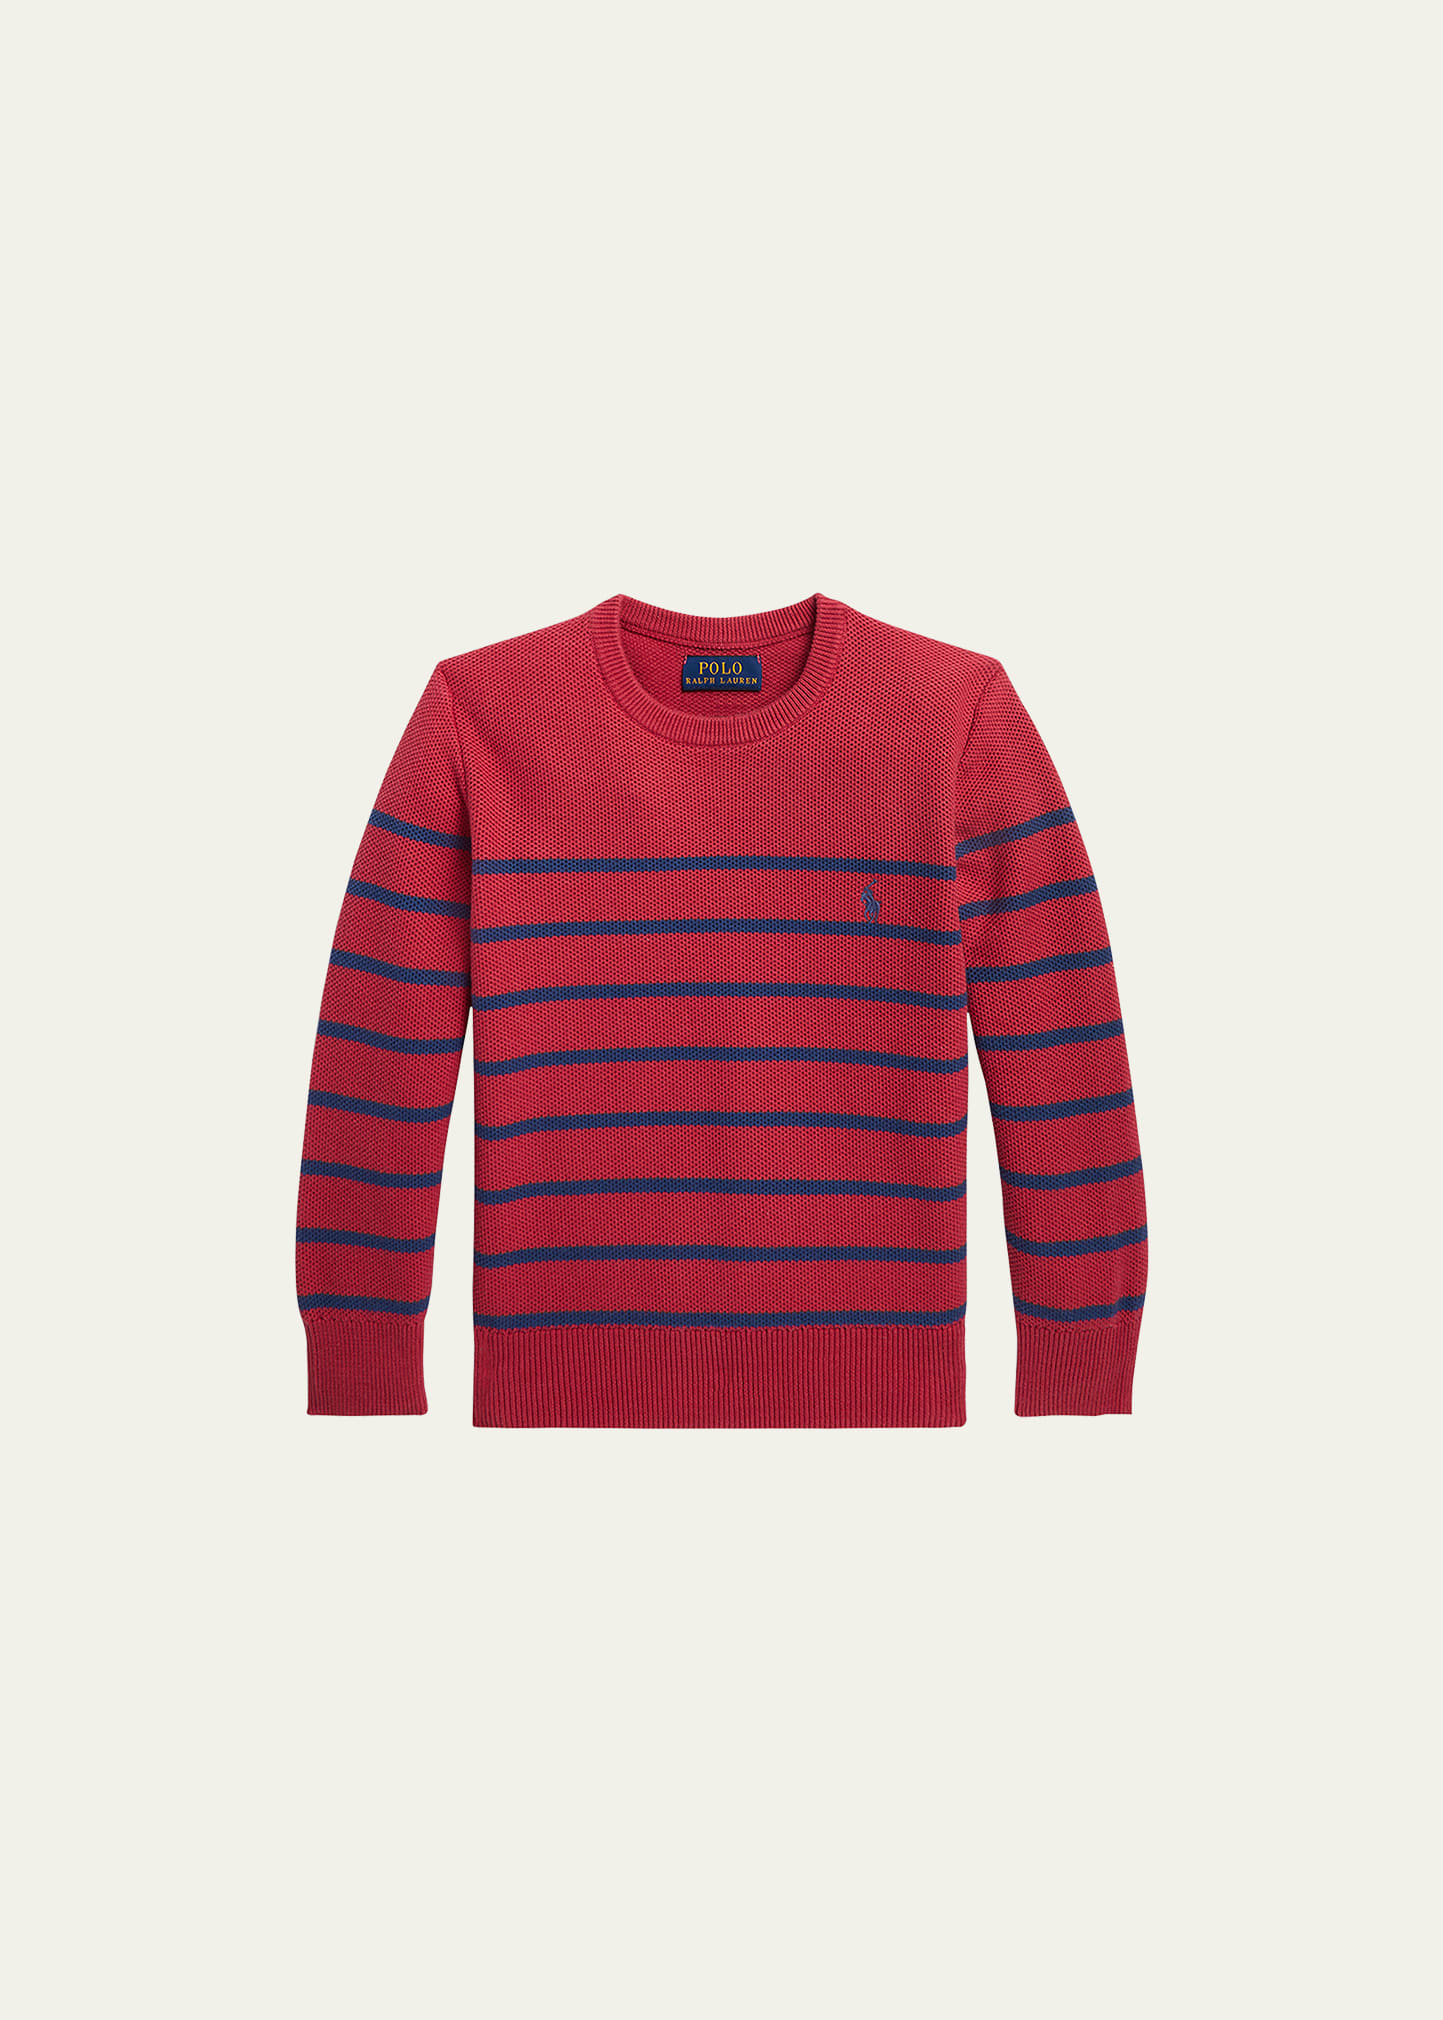 Boy's Mesh Knit Striped Sweater, Size 2-4